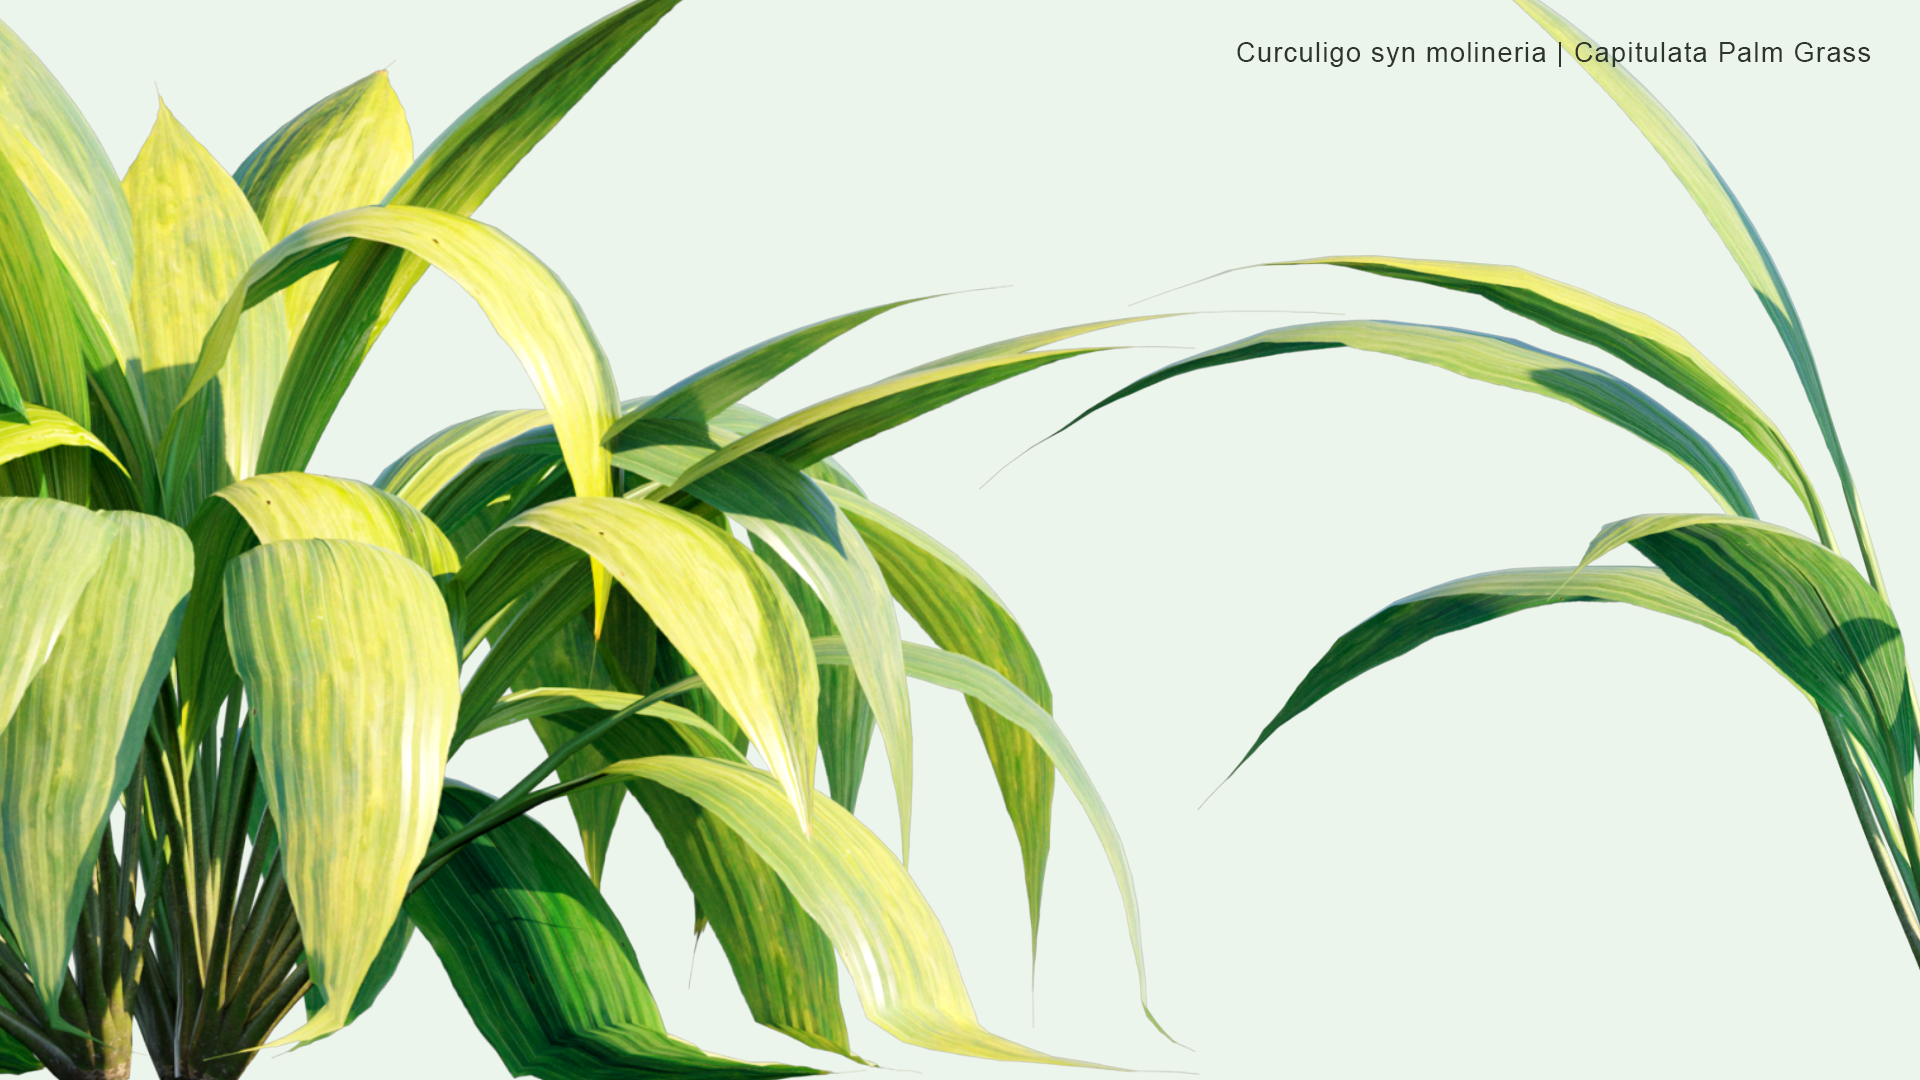 2D Curculigo Syn Molineria - Capitulata Palm Grass